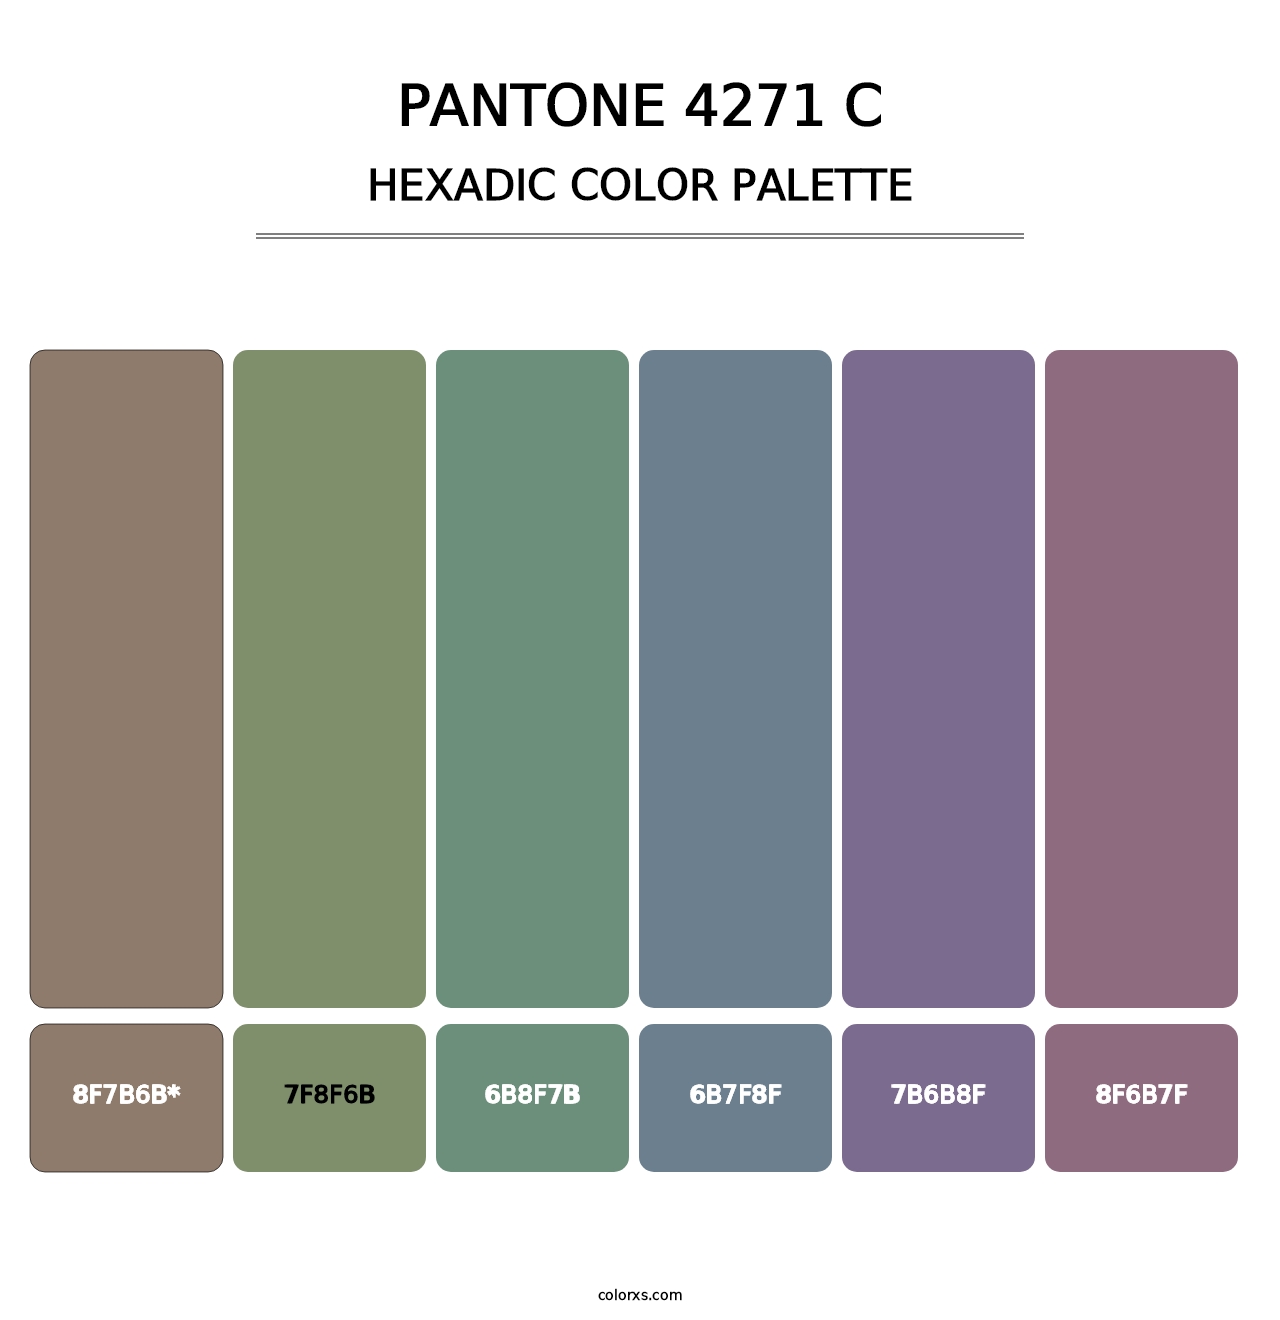 PANTONE 4271 C - Hexadic Color Palette